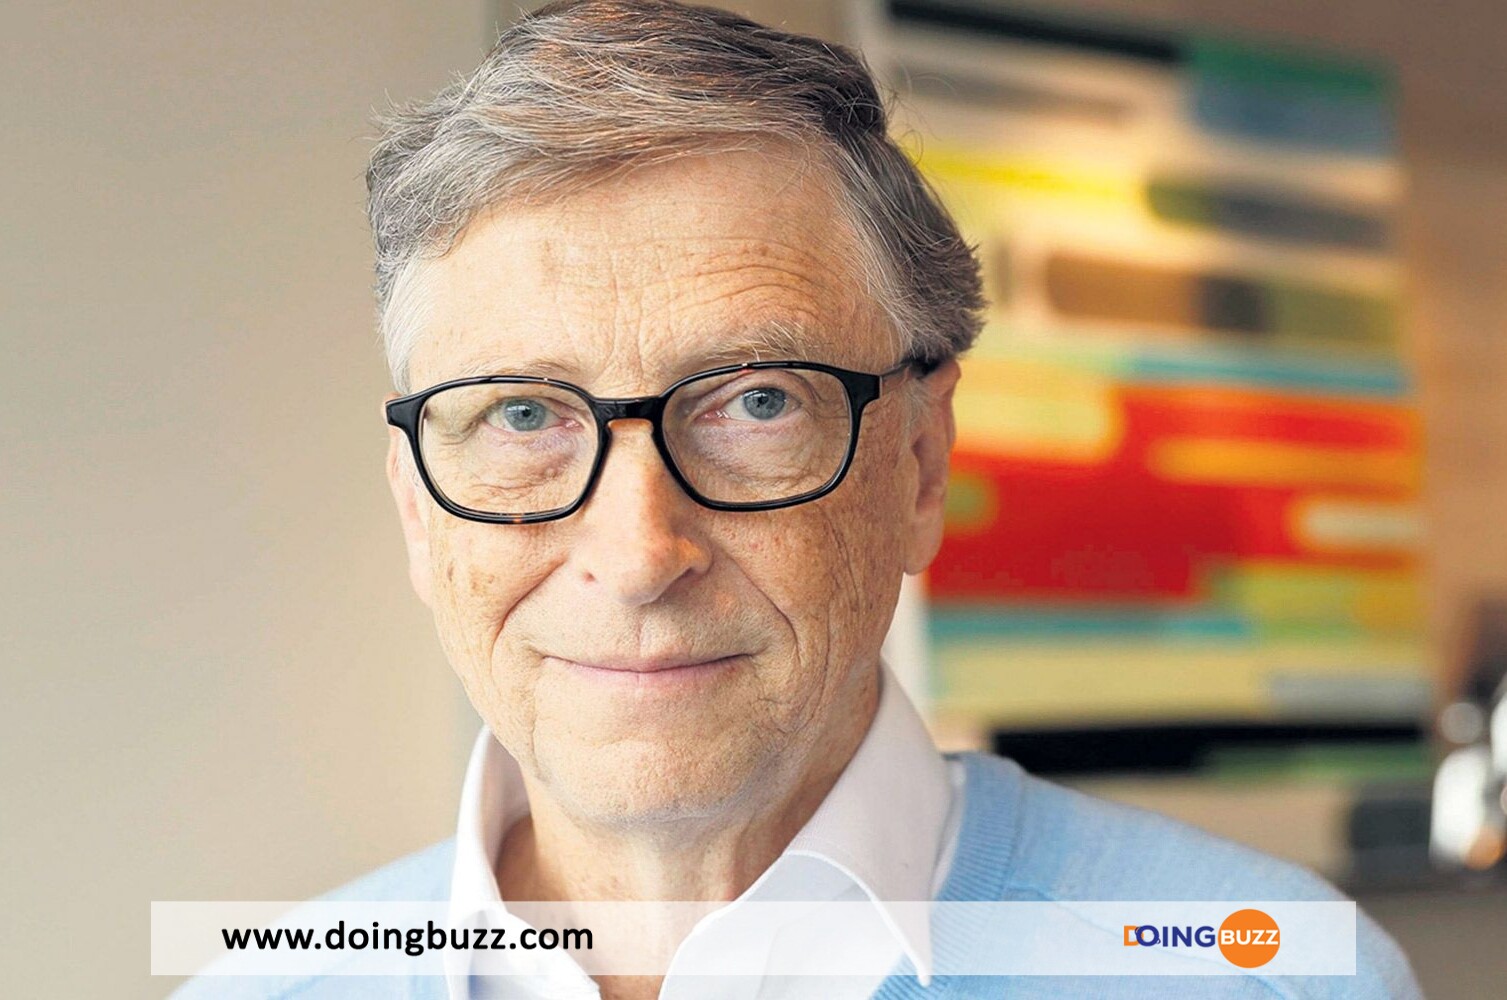 Bill Gates Doingbuzz